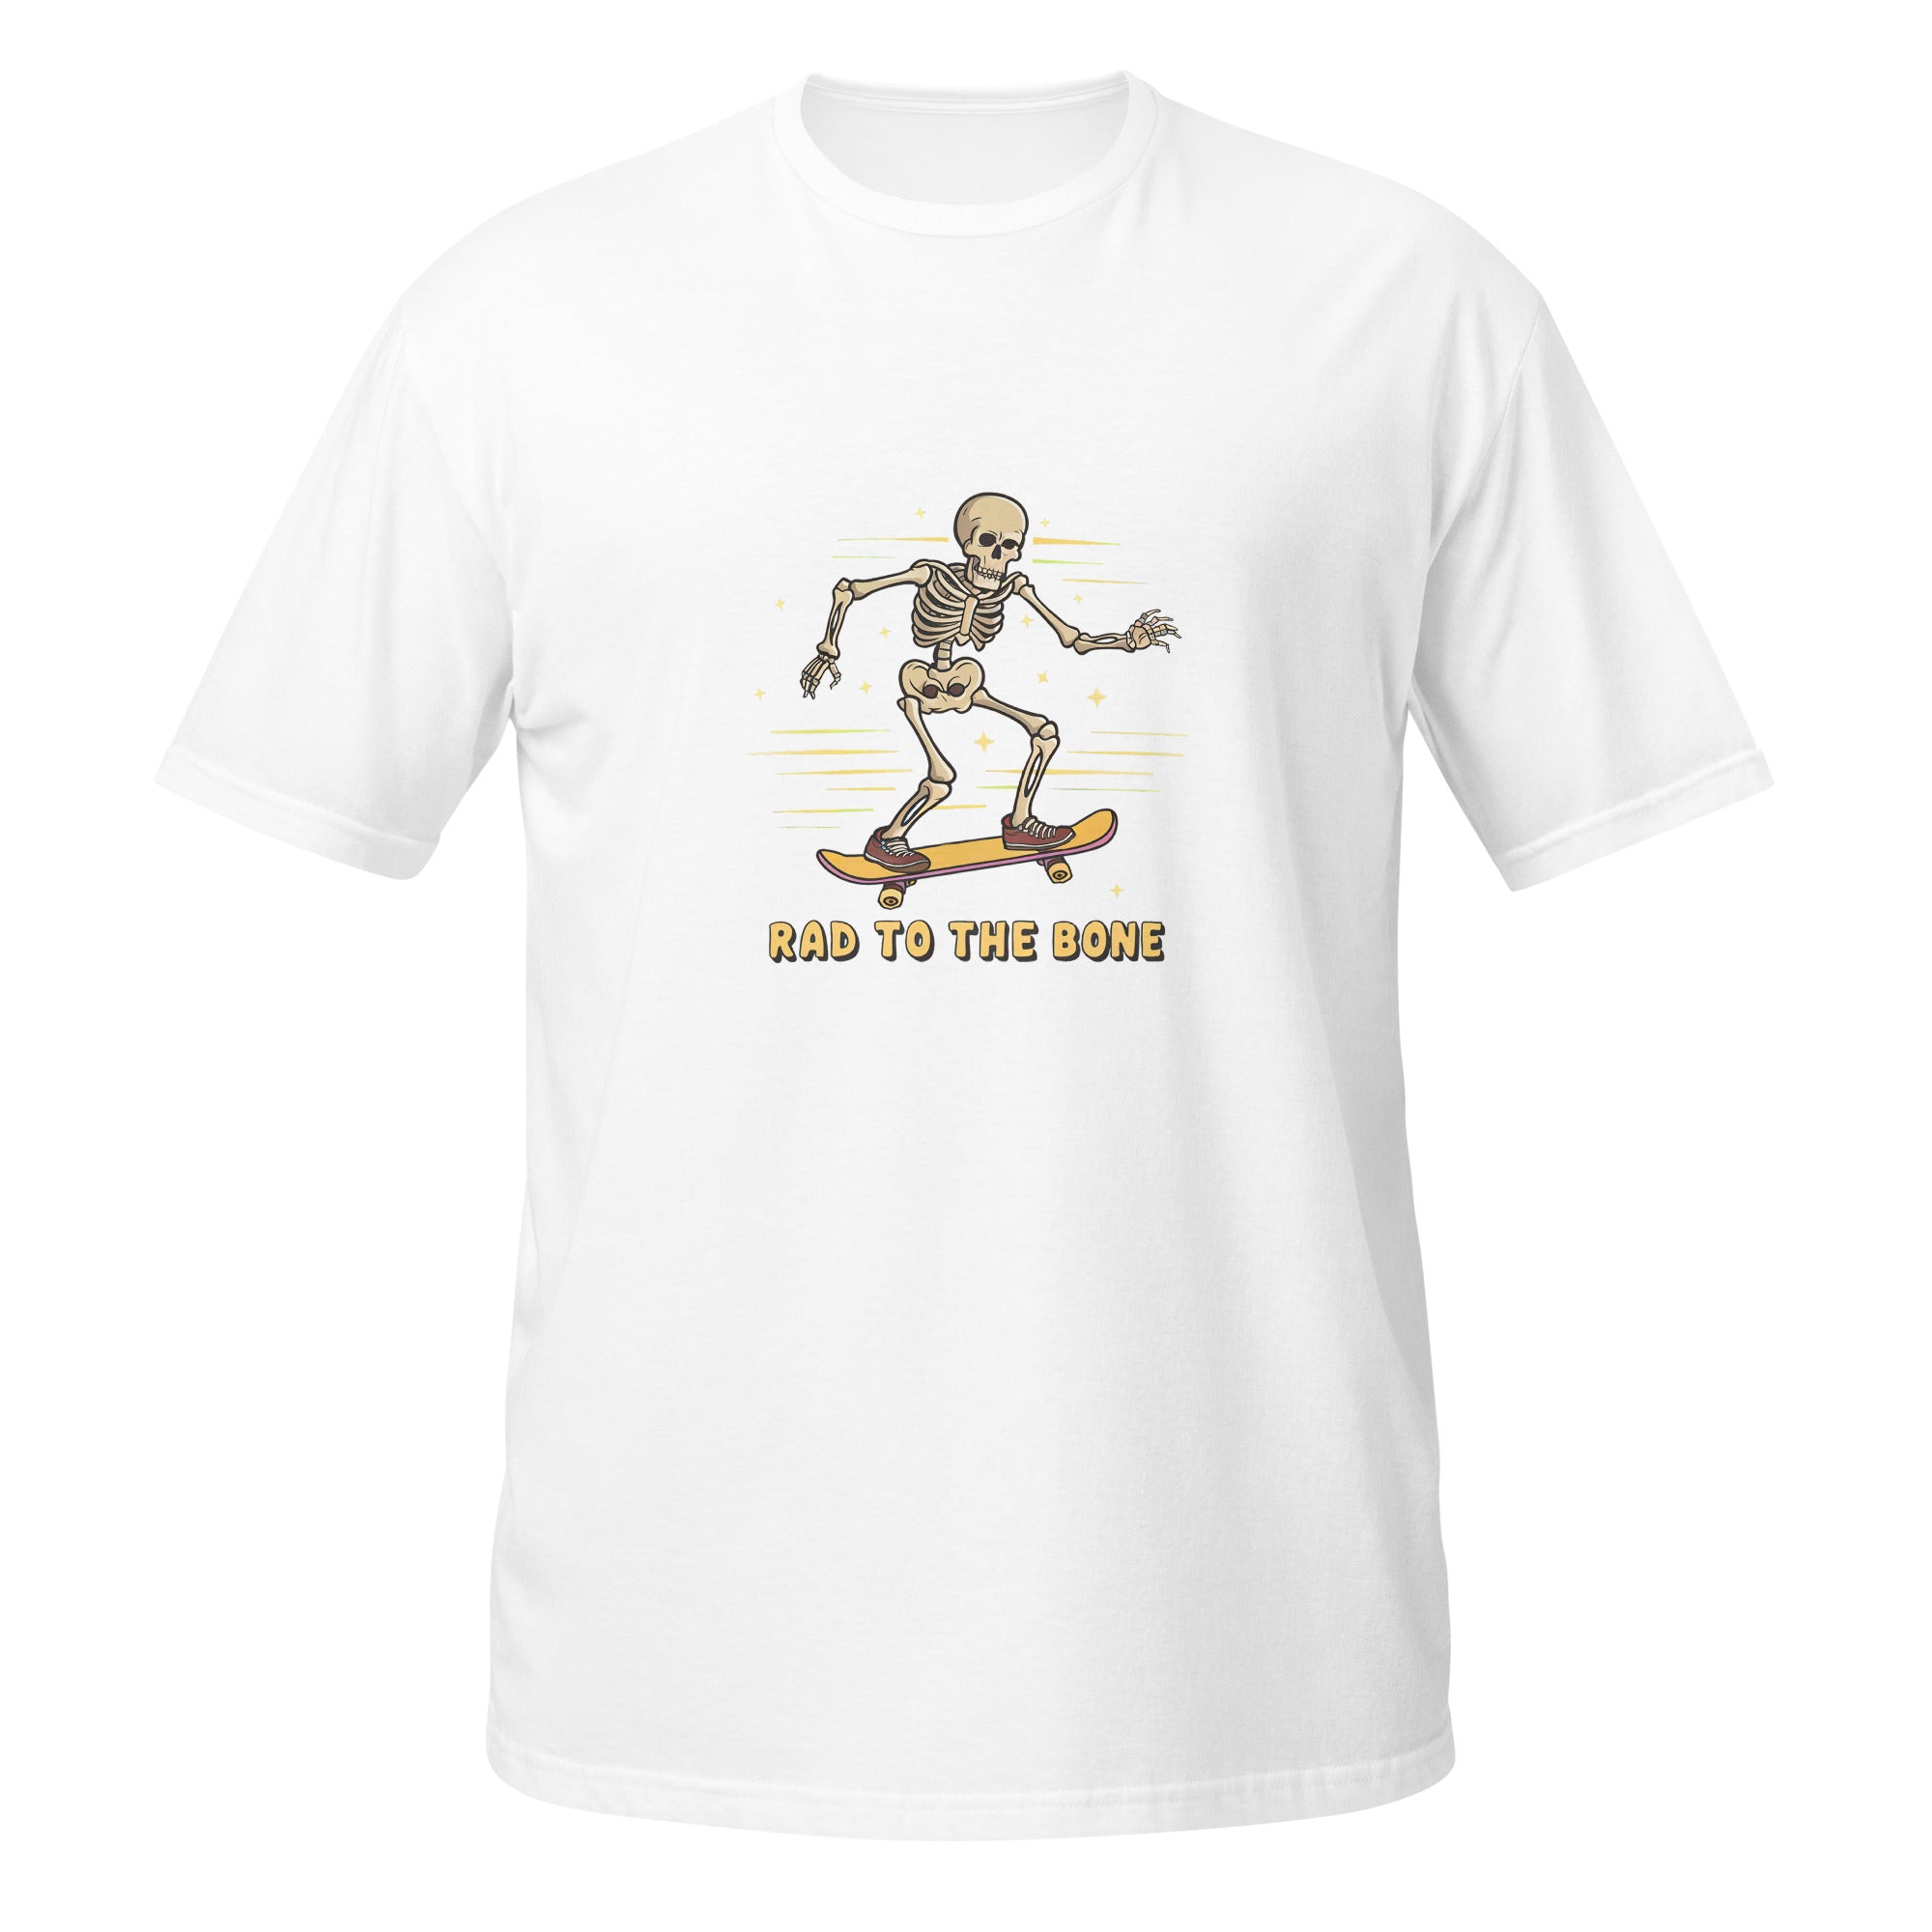 Rad To The Bone, Skateboarding Skeleton T Shirt. Unisex